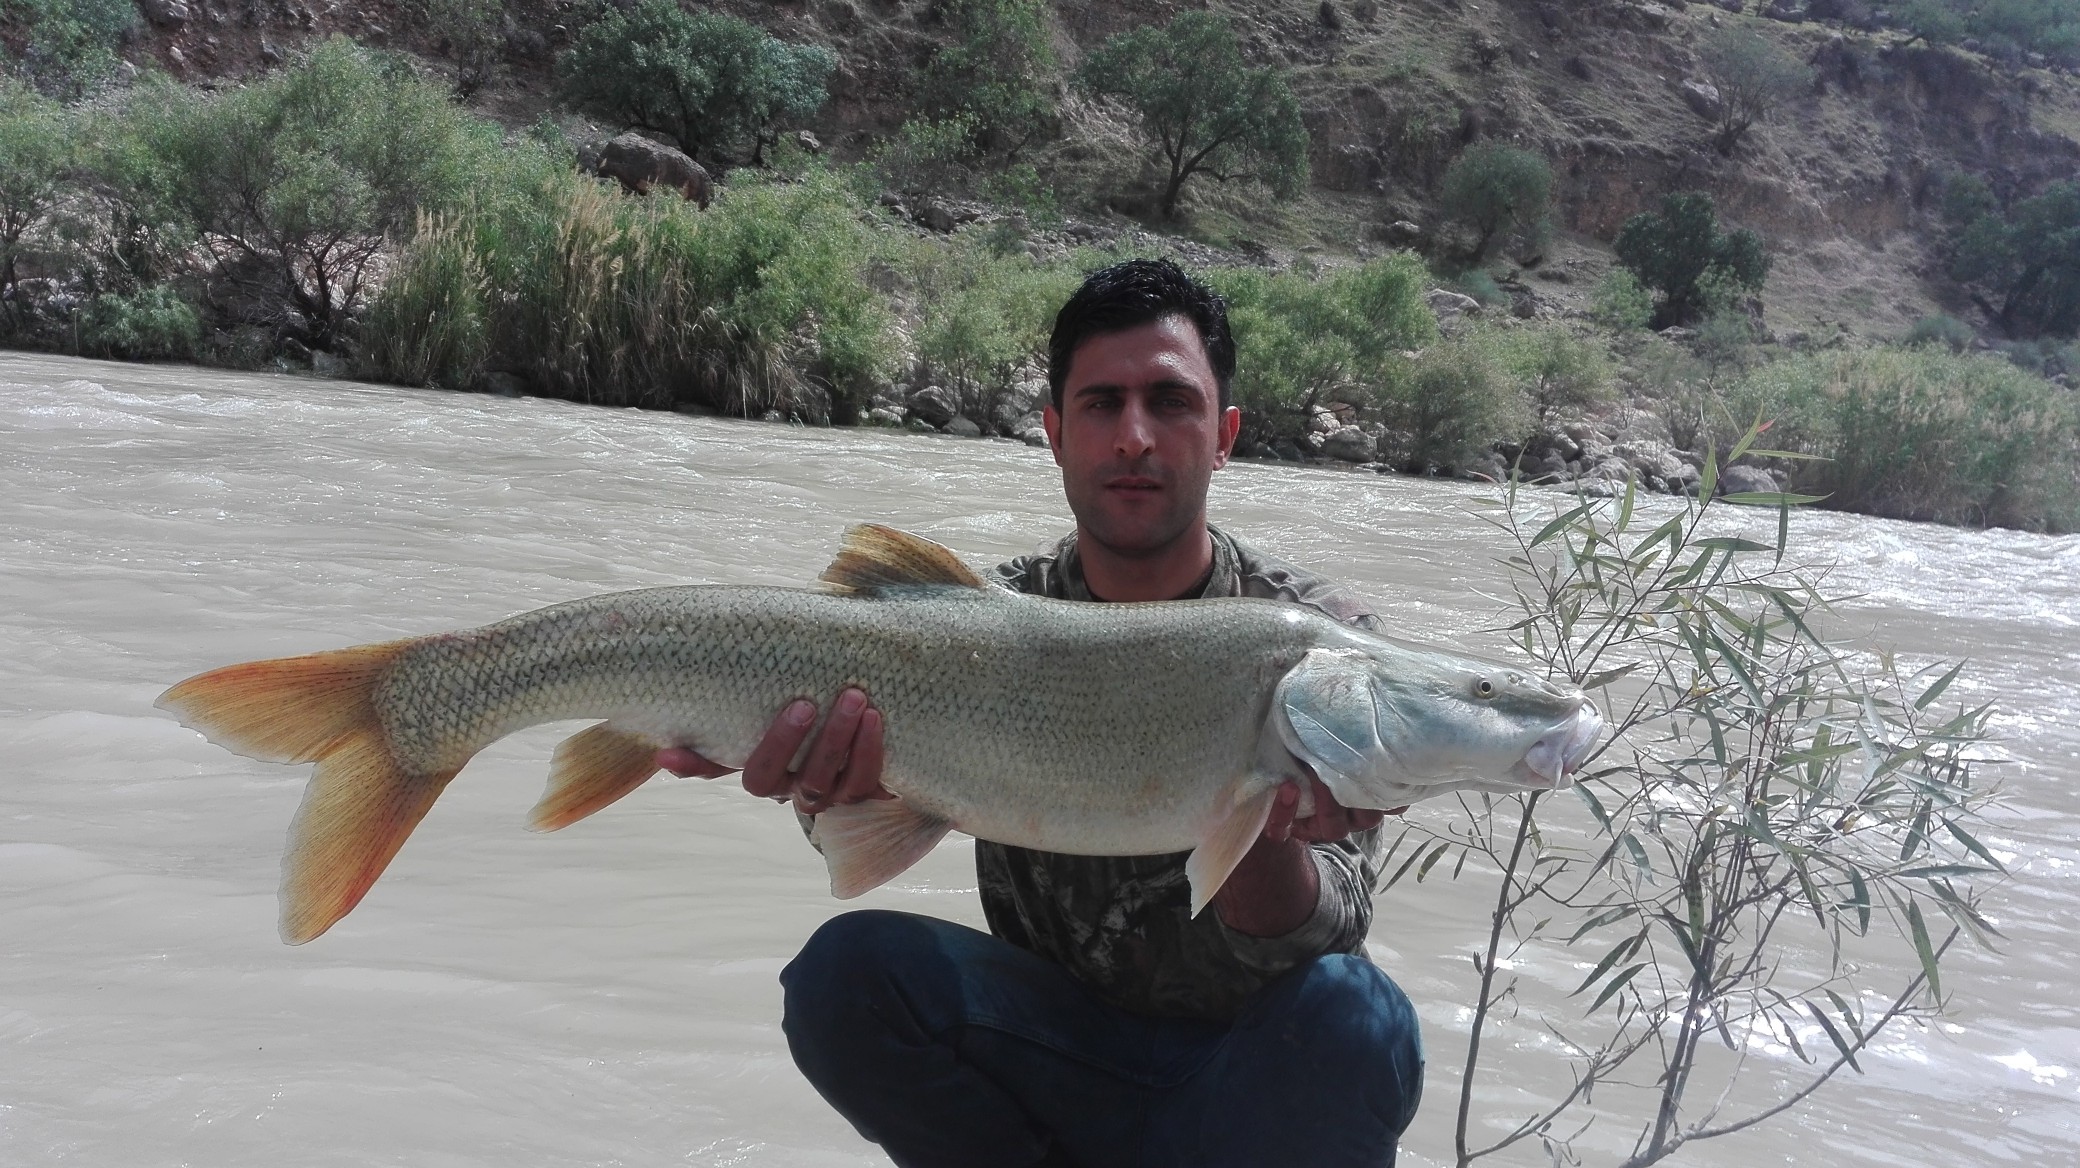 http://esfahanfishing.persiangig.com/mangar/IMG_20180503_105634-2080x1168.jpg